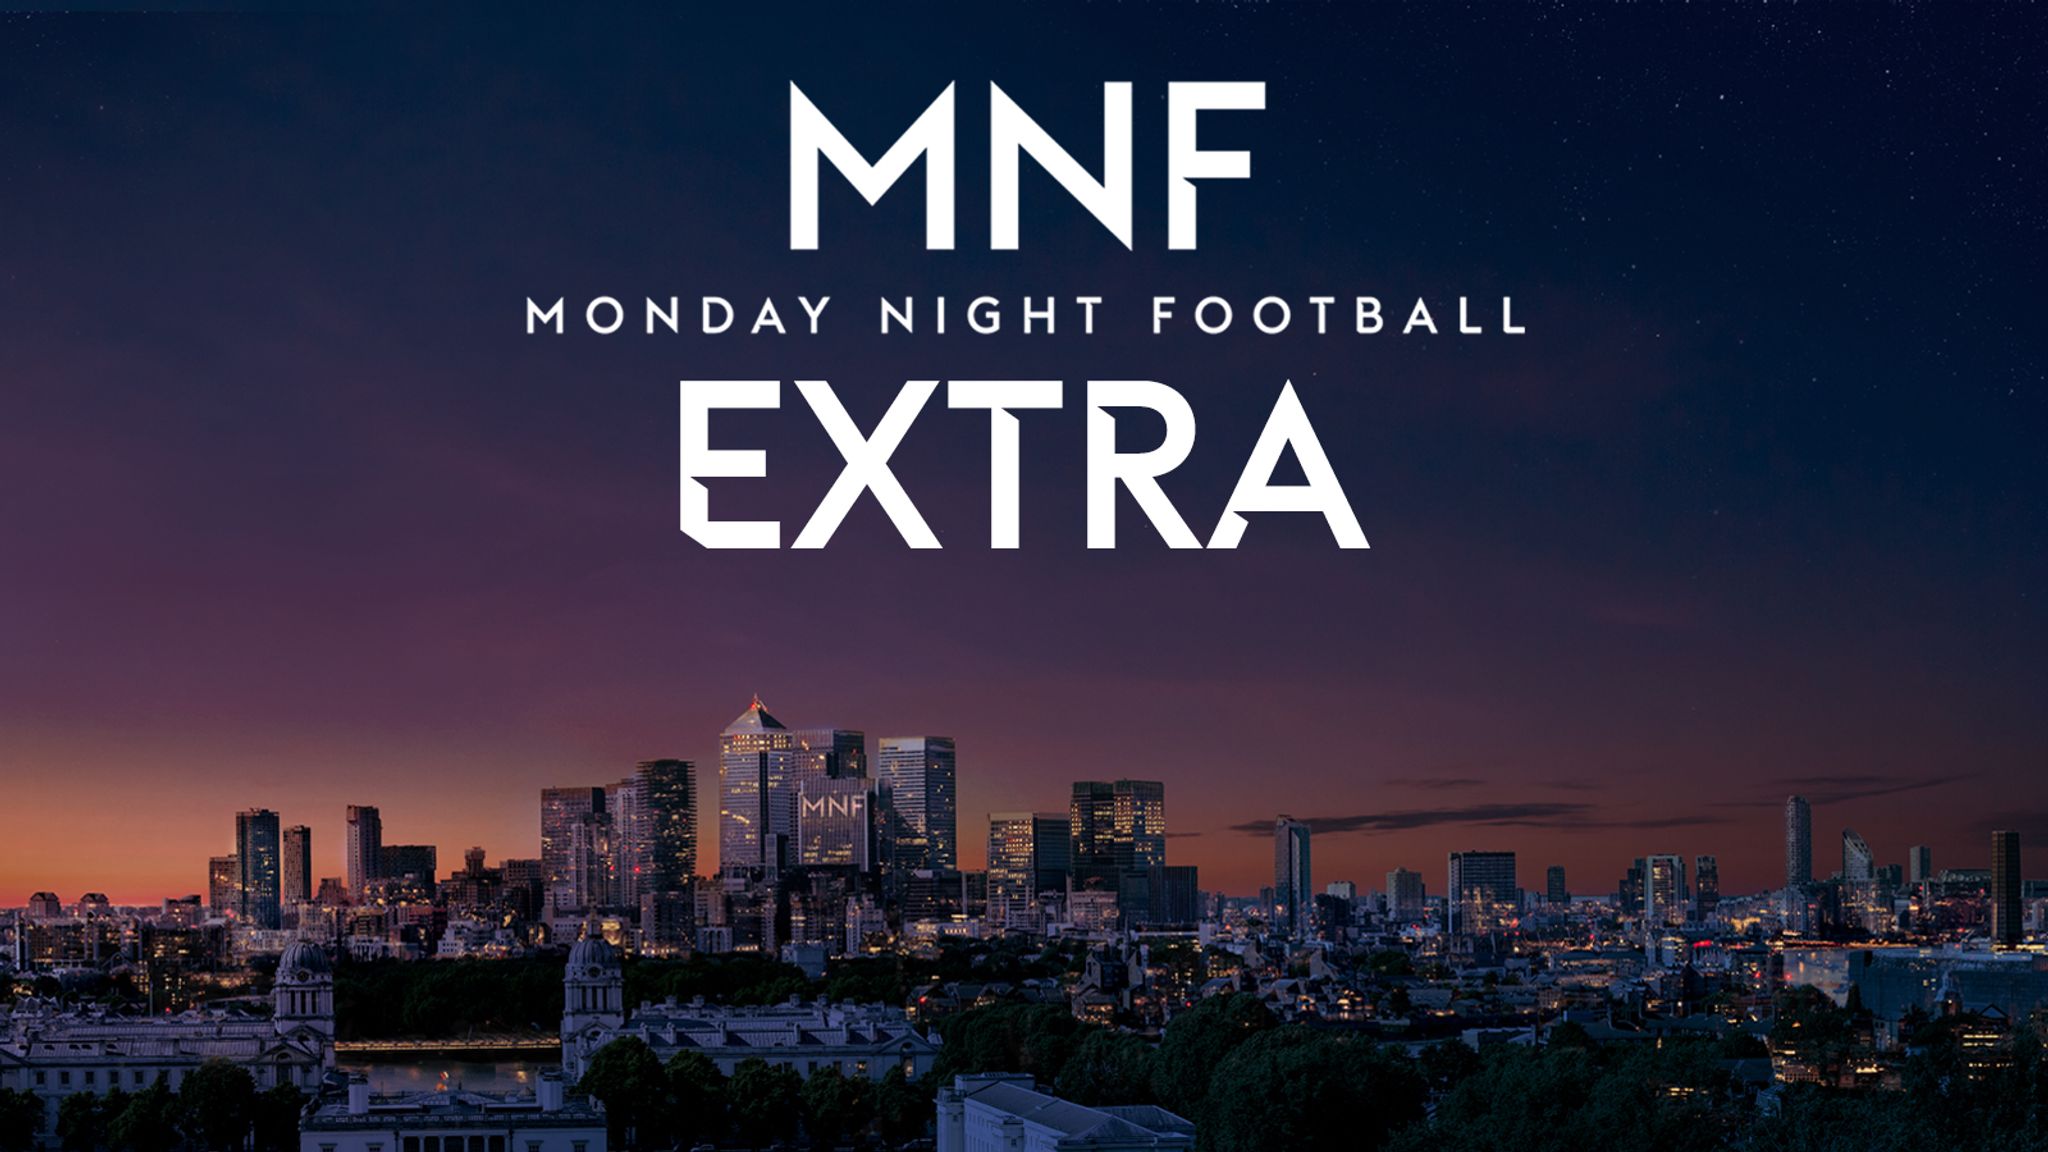 Monday Night Football Extra: Expected goals explained, Football News